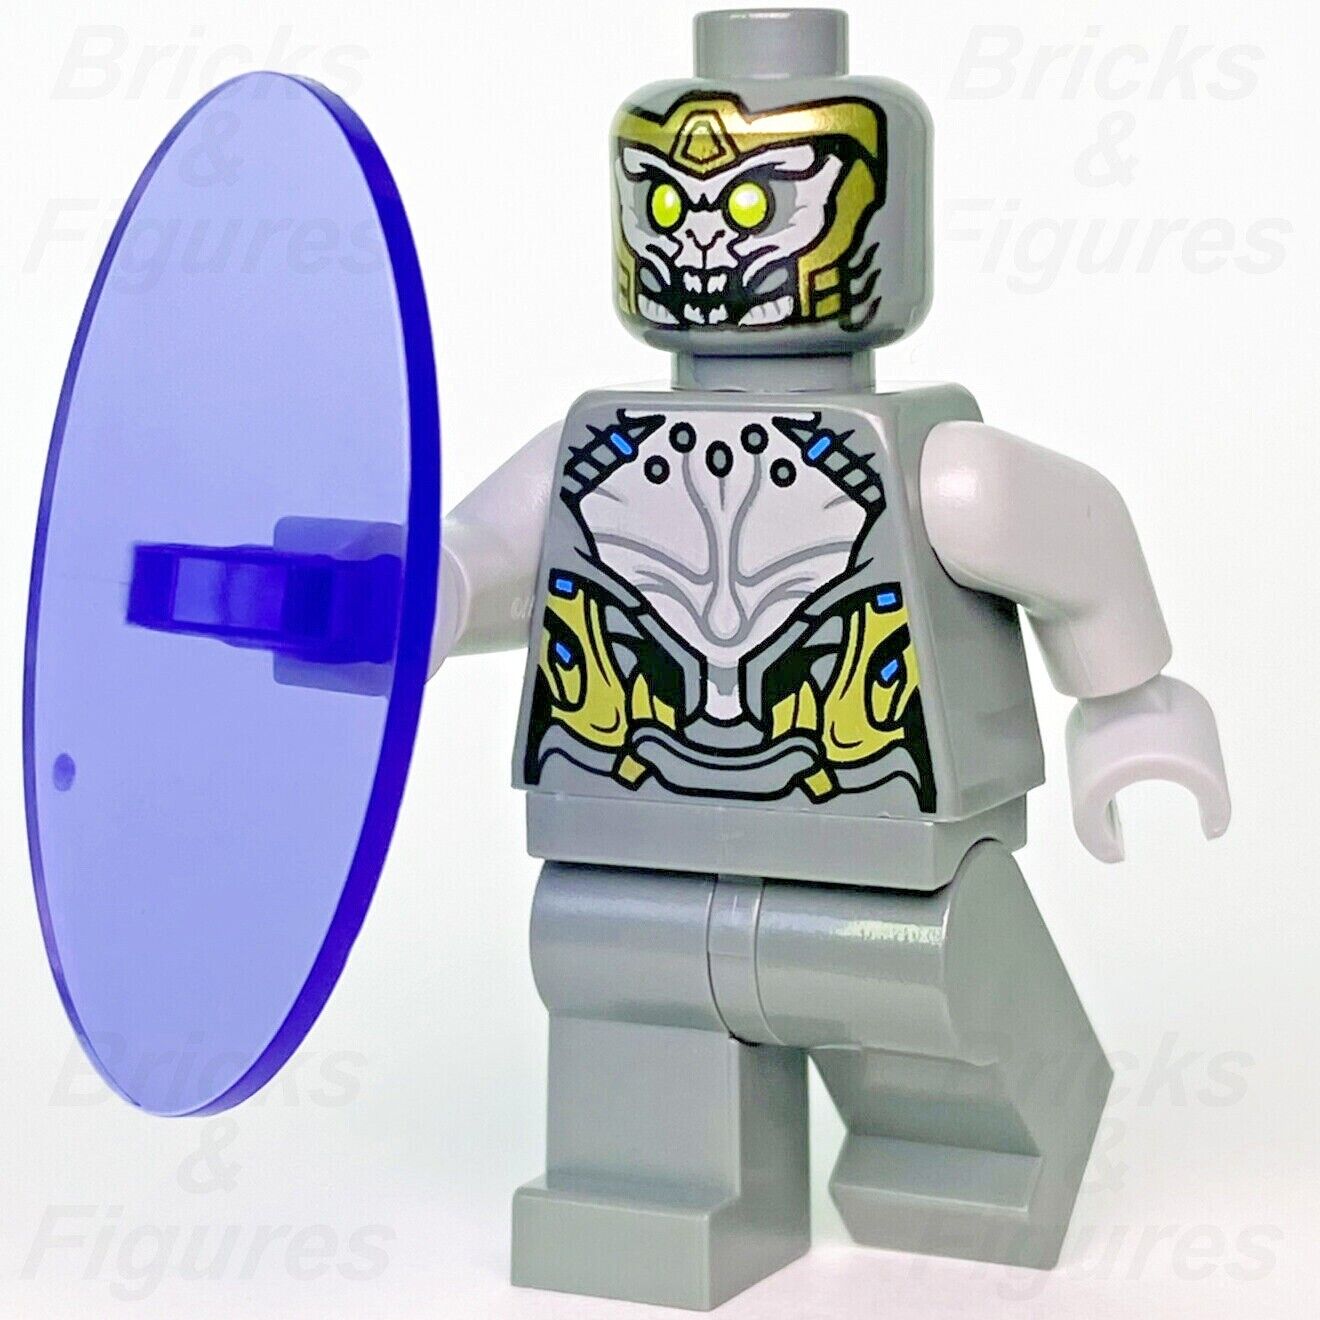 Marvel Super Heroes LEGO Chitauri Avengers Endgame Minifigure 40525 sh730 New - Bricks & Figures